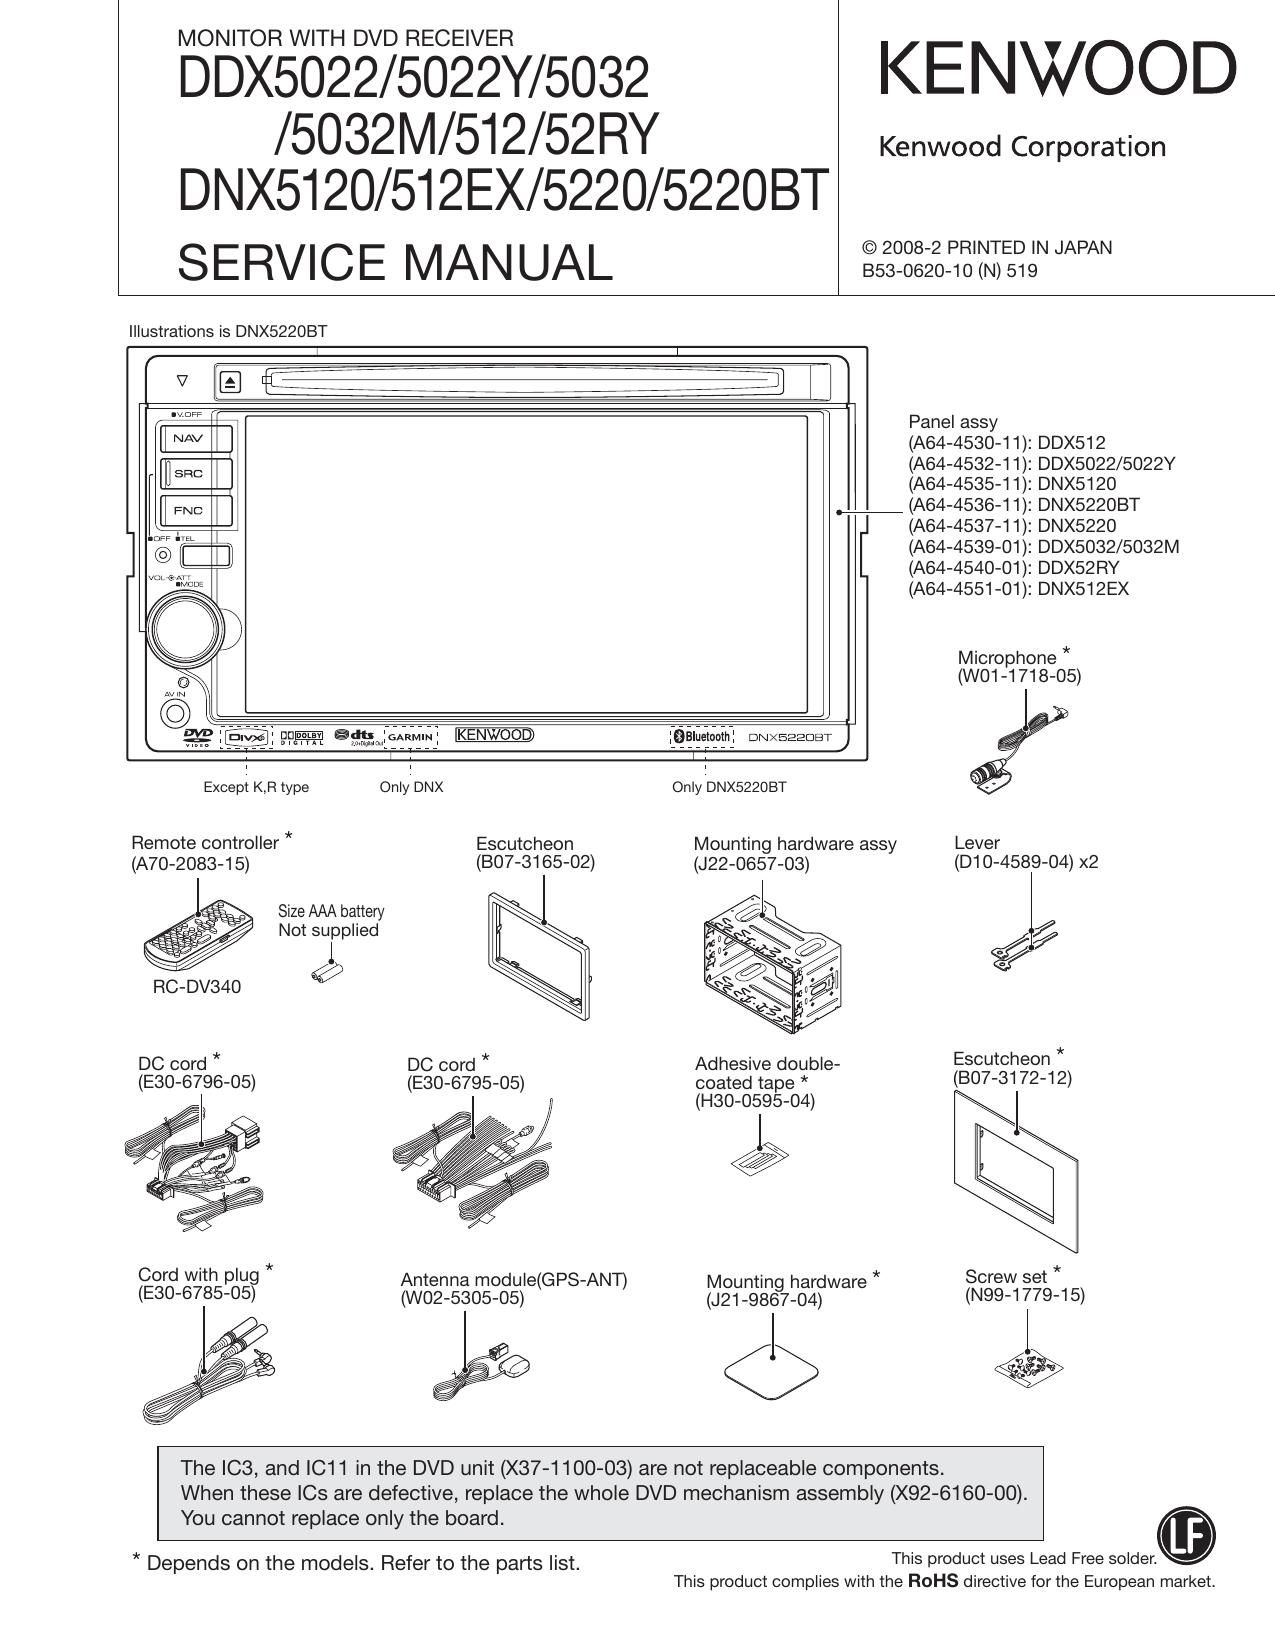 Kenwood DNX 512 EX Service Manual